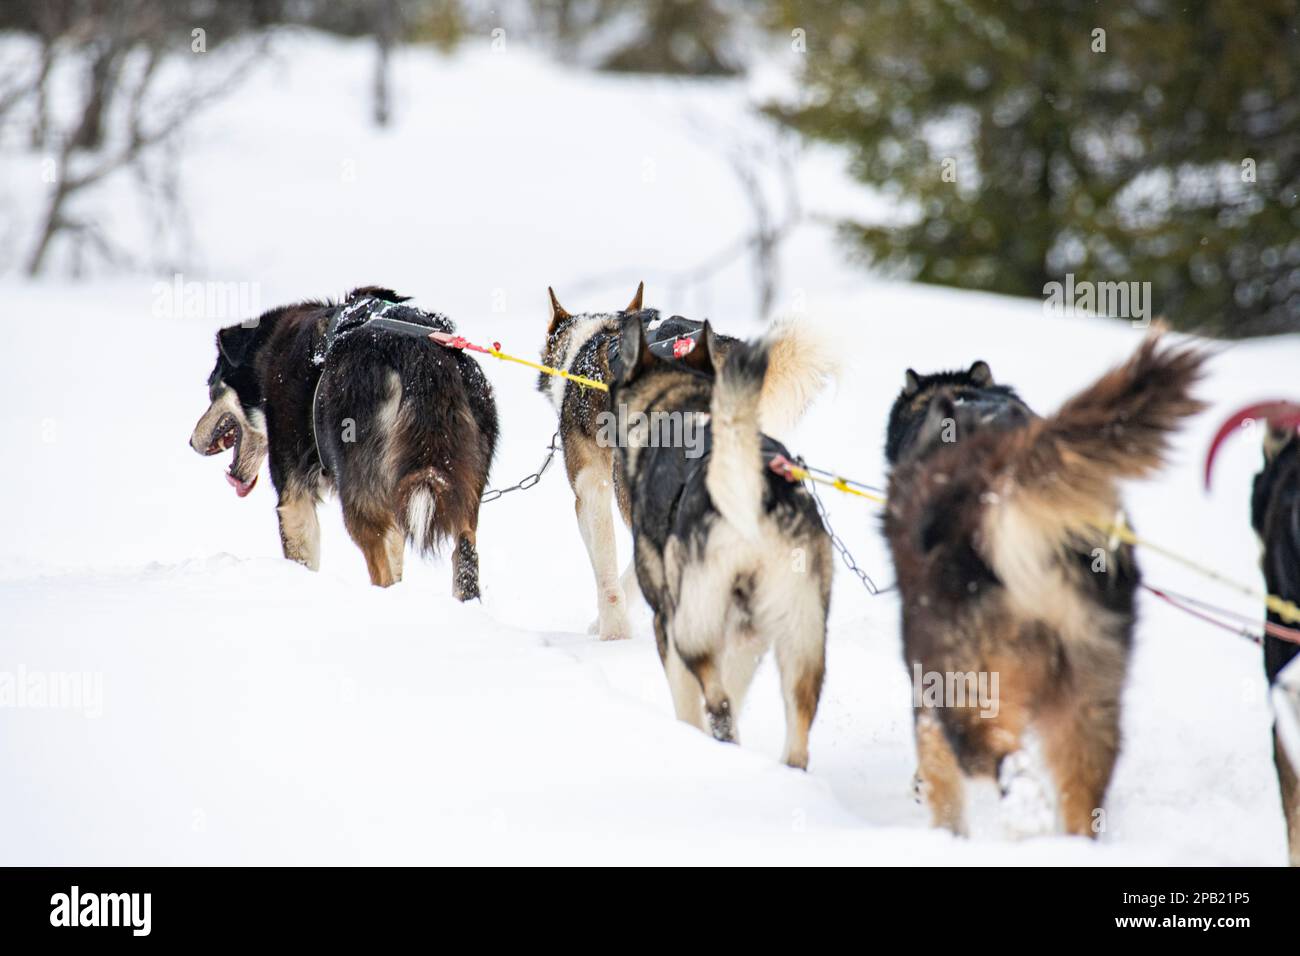 Winter dog sledding in Norway Stock Photo